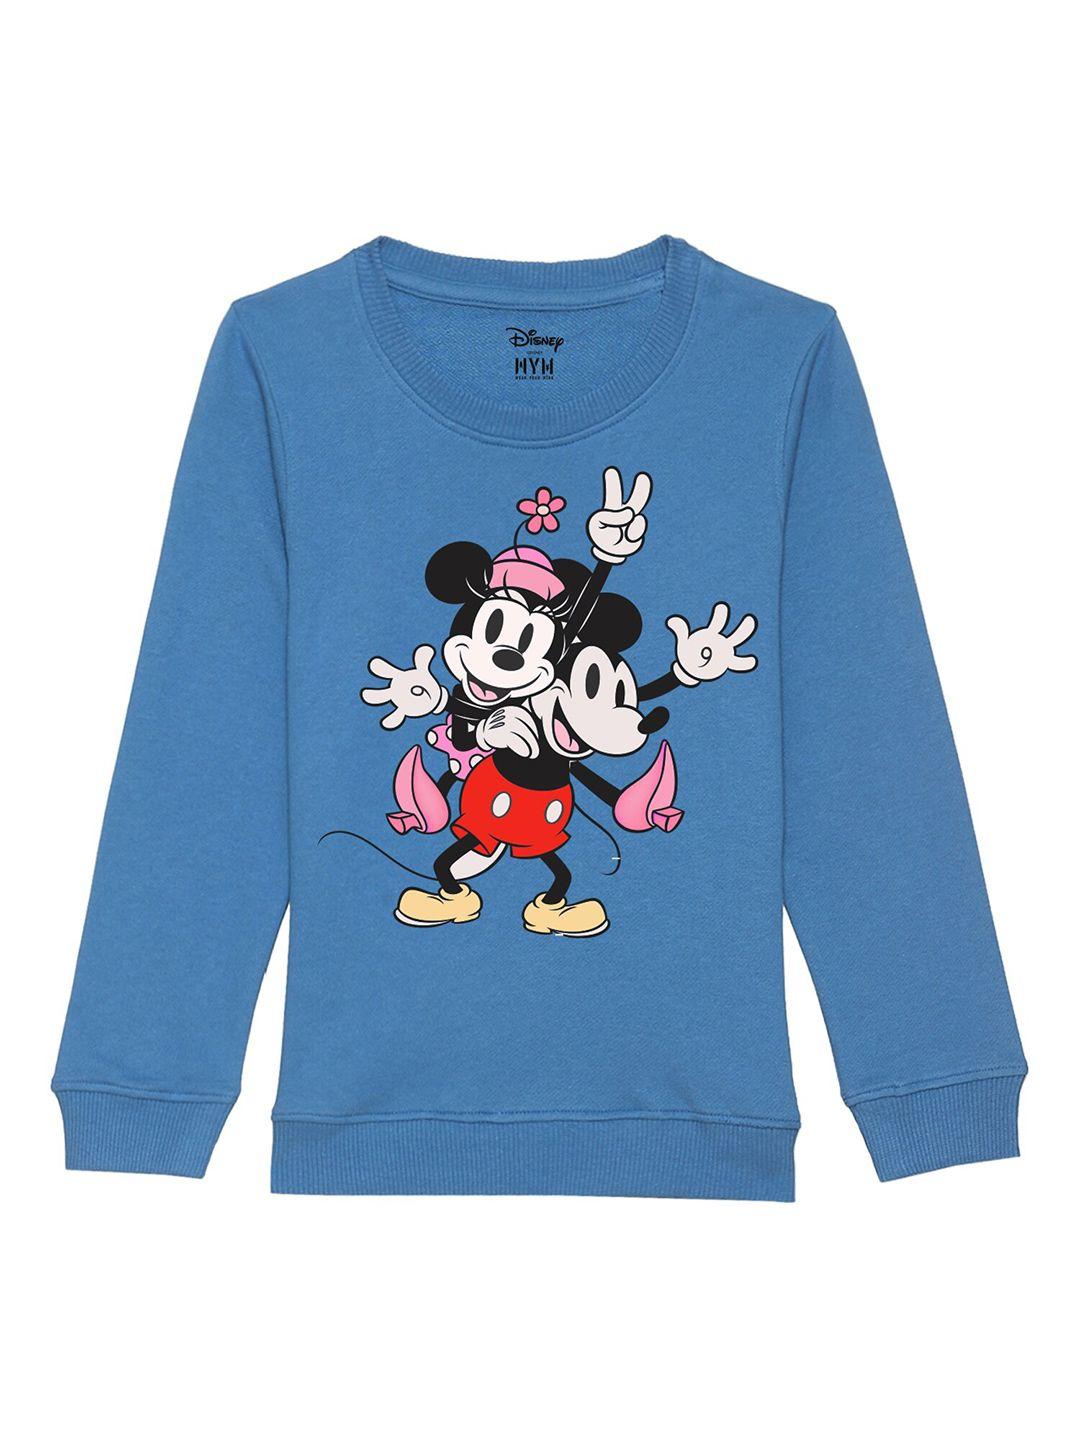 disney-by-wear-your-mind-kids-blue-printed-sweatshirt